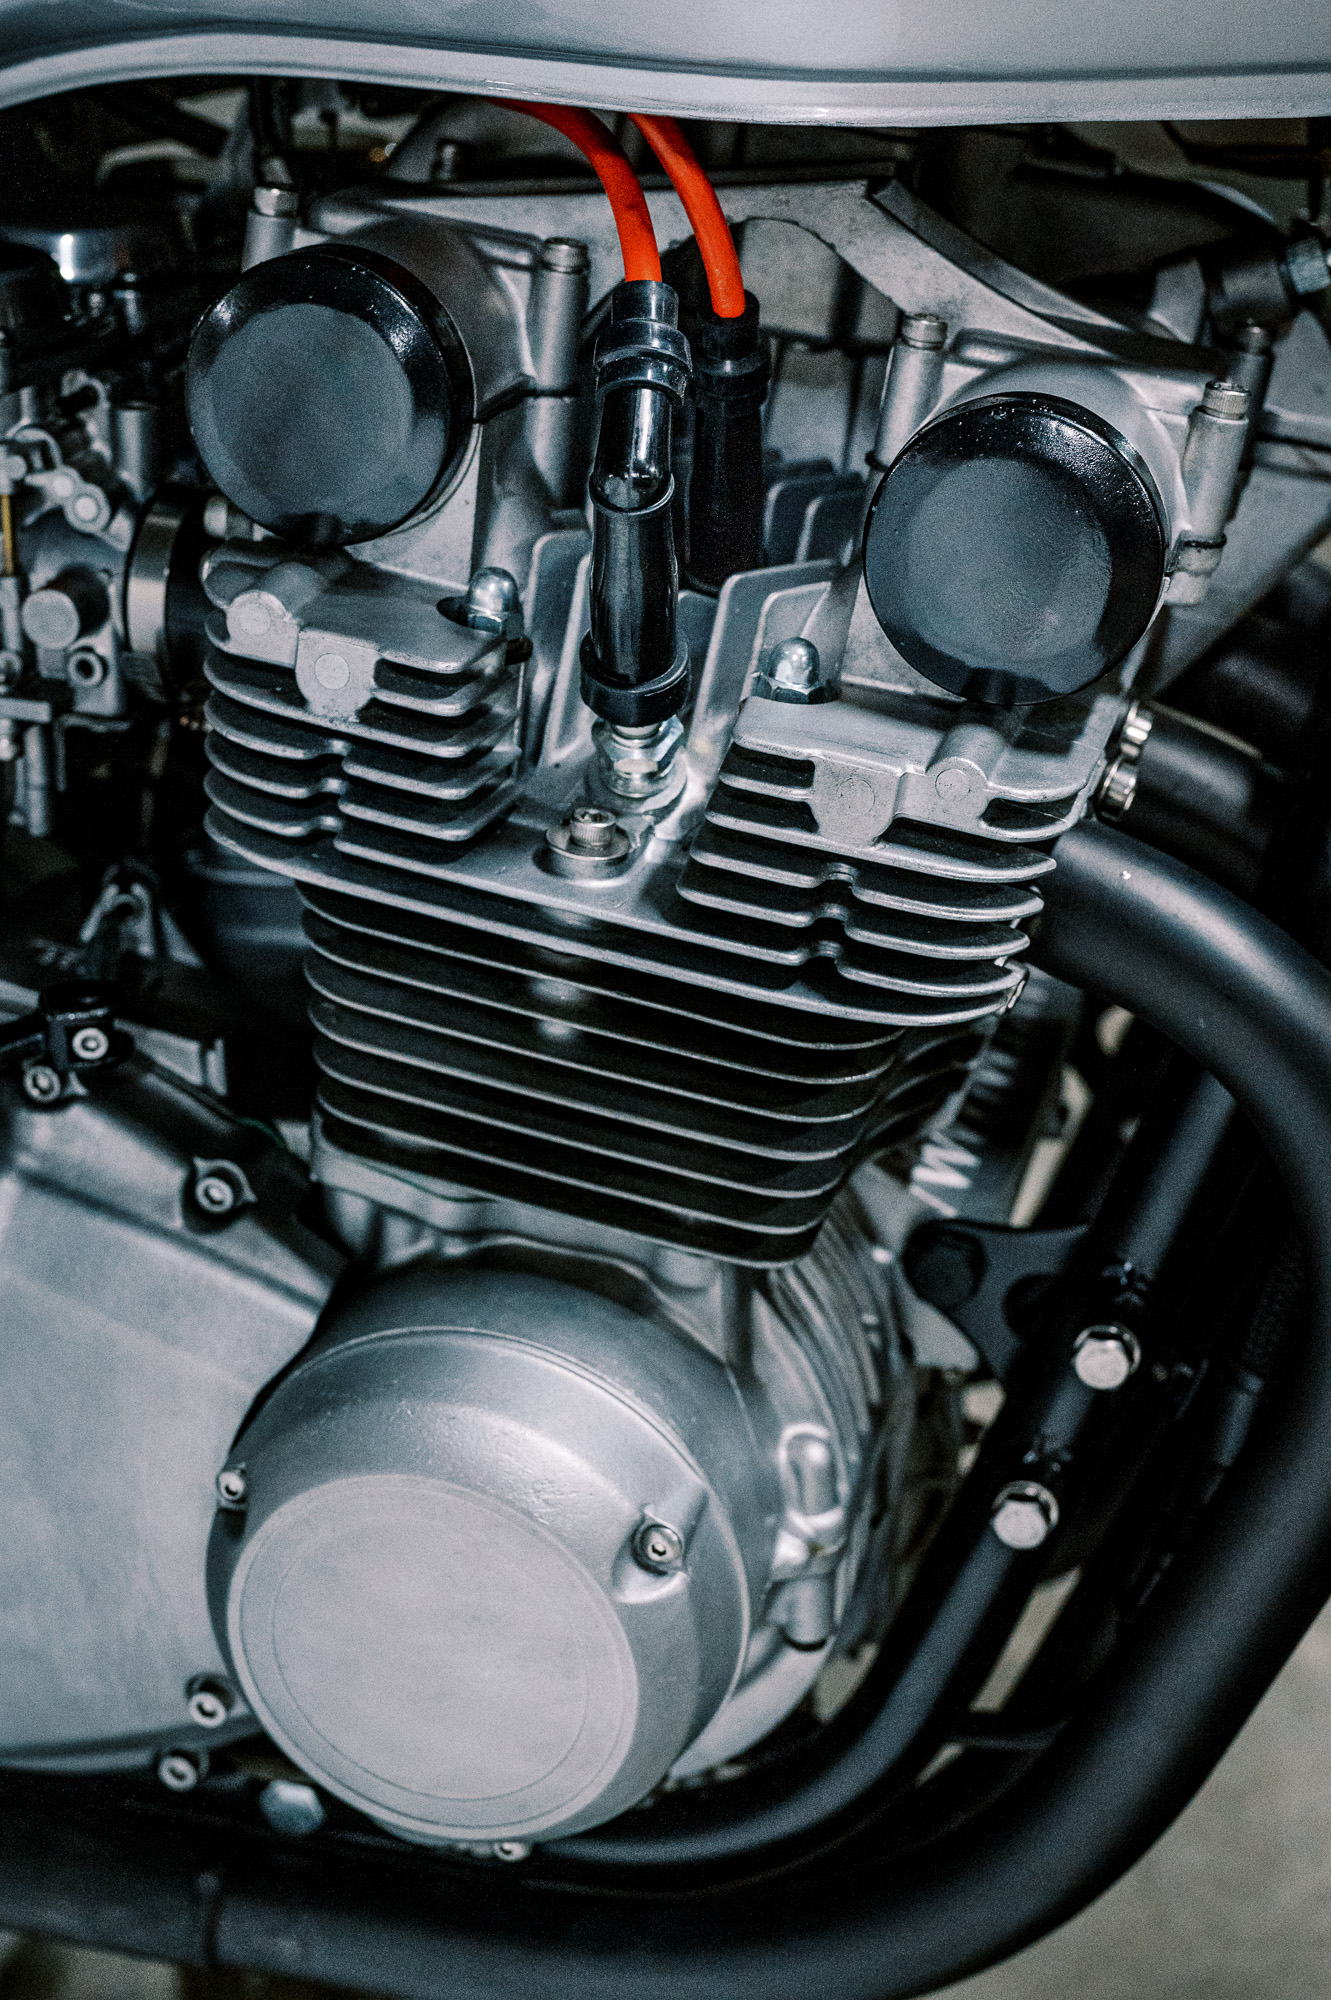 The engine of a 1981 Suzuki Katana Motorcycle in an underground carpark